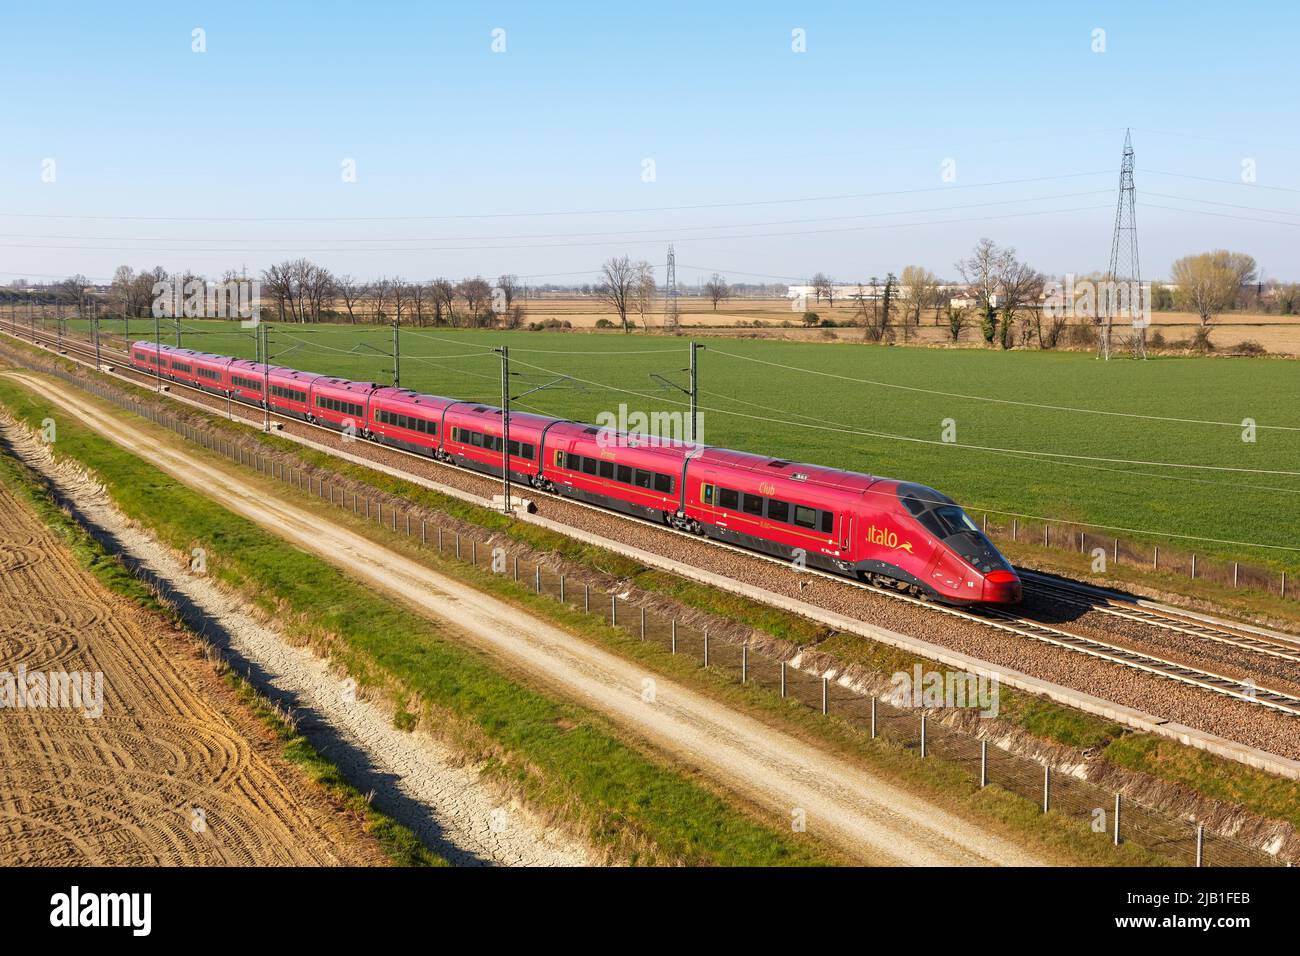 Melegnano, Italia - 24 de marzo de 2022: Italo AGV tren de alta velocidad de Nuovo trasporto Viaggiatori NTV en la línea de ferrocarril de alta velocidad de Milán - Bolonia Foto de stock